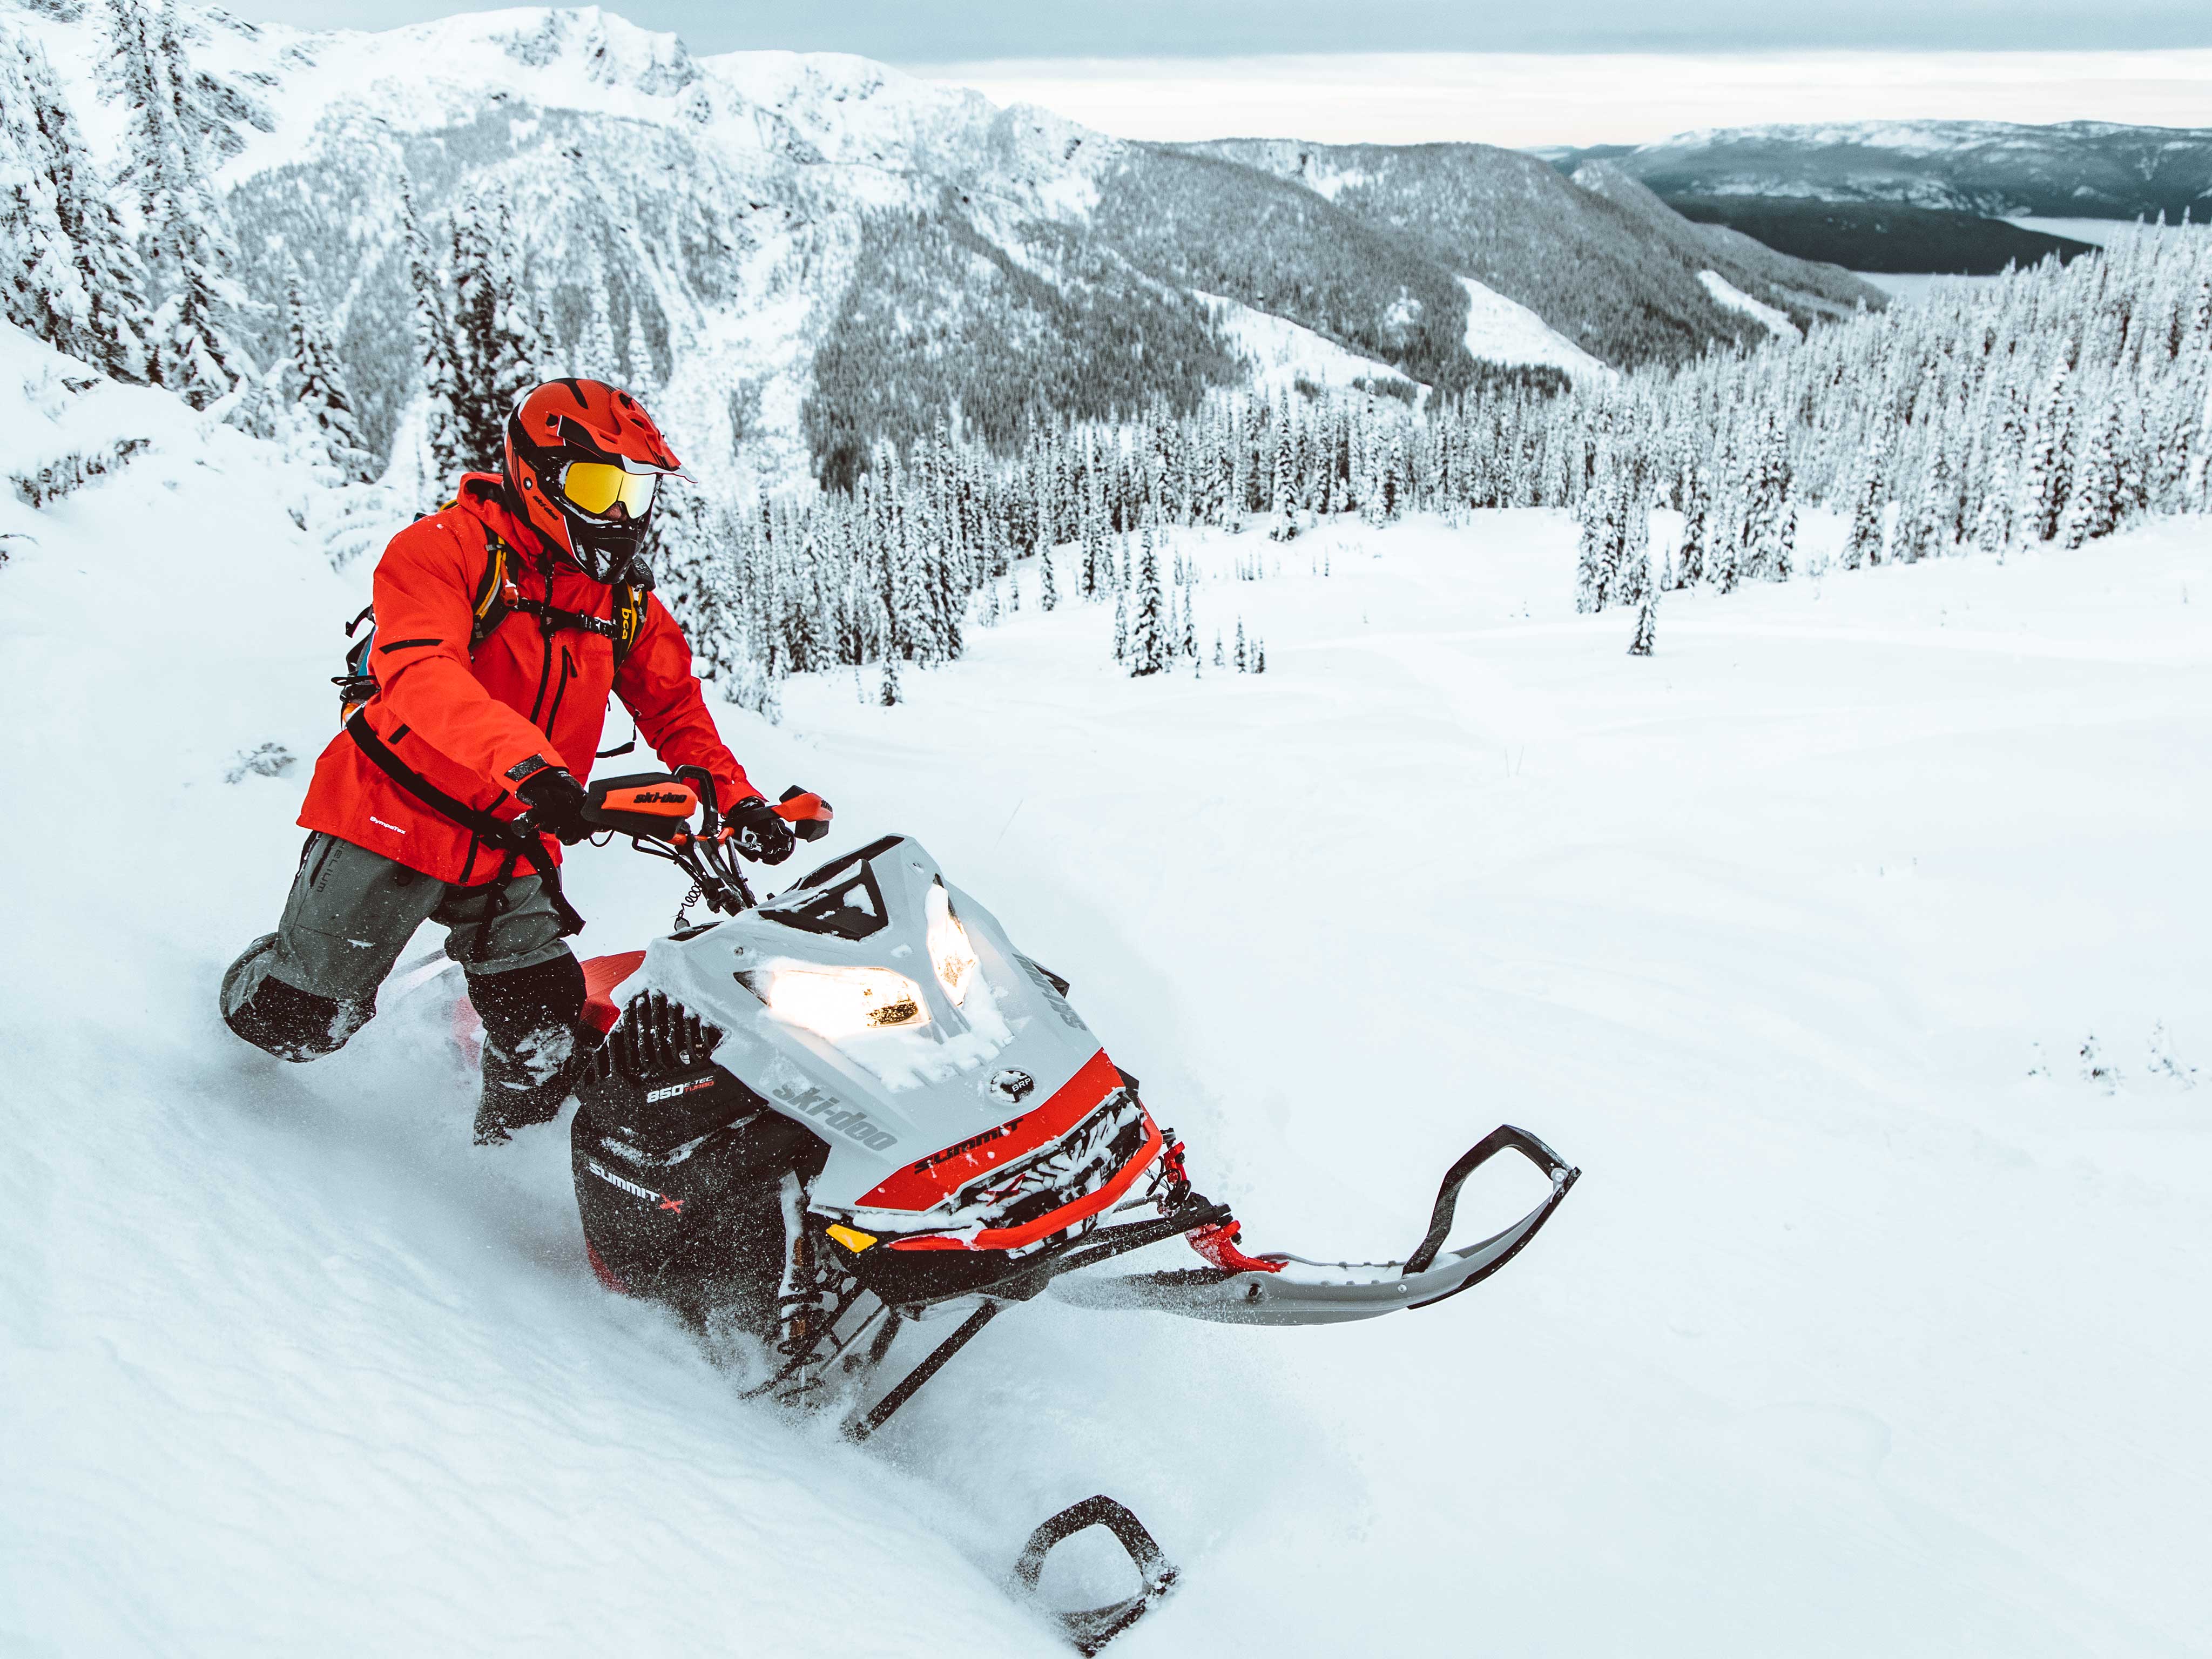 Tony Jenkins enjoying Deep-Snow with his Ski-Doo